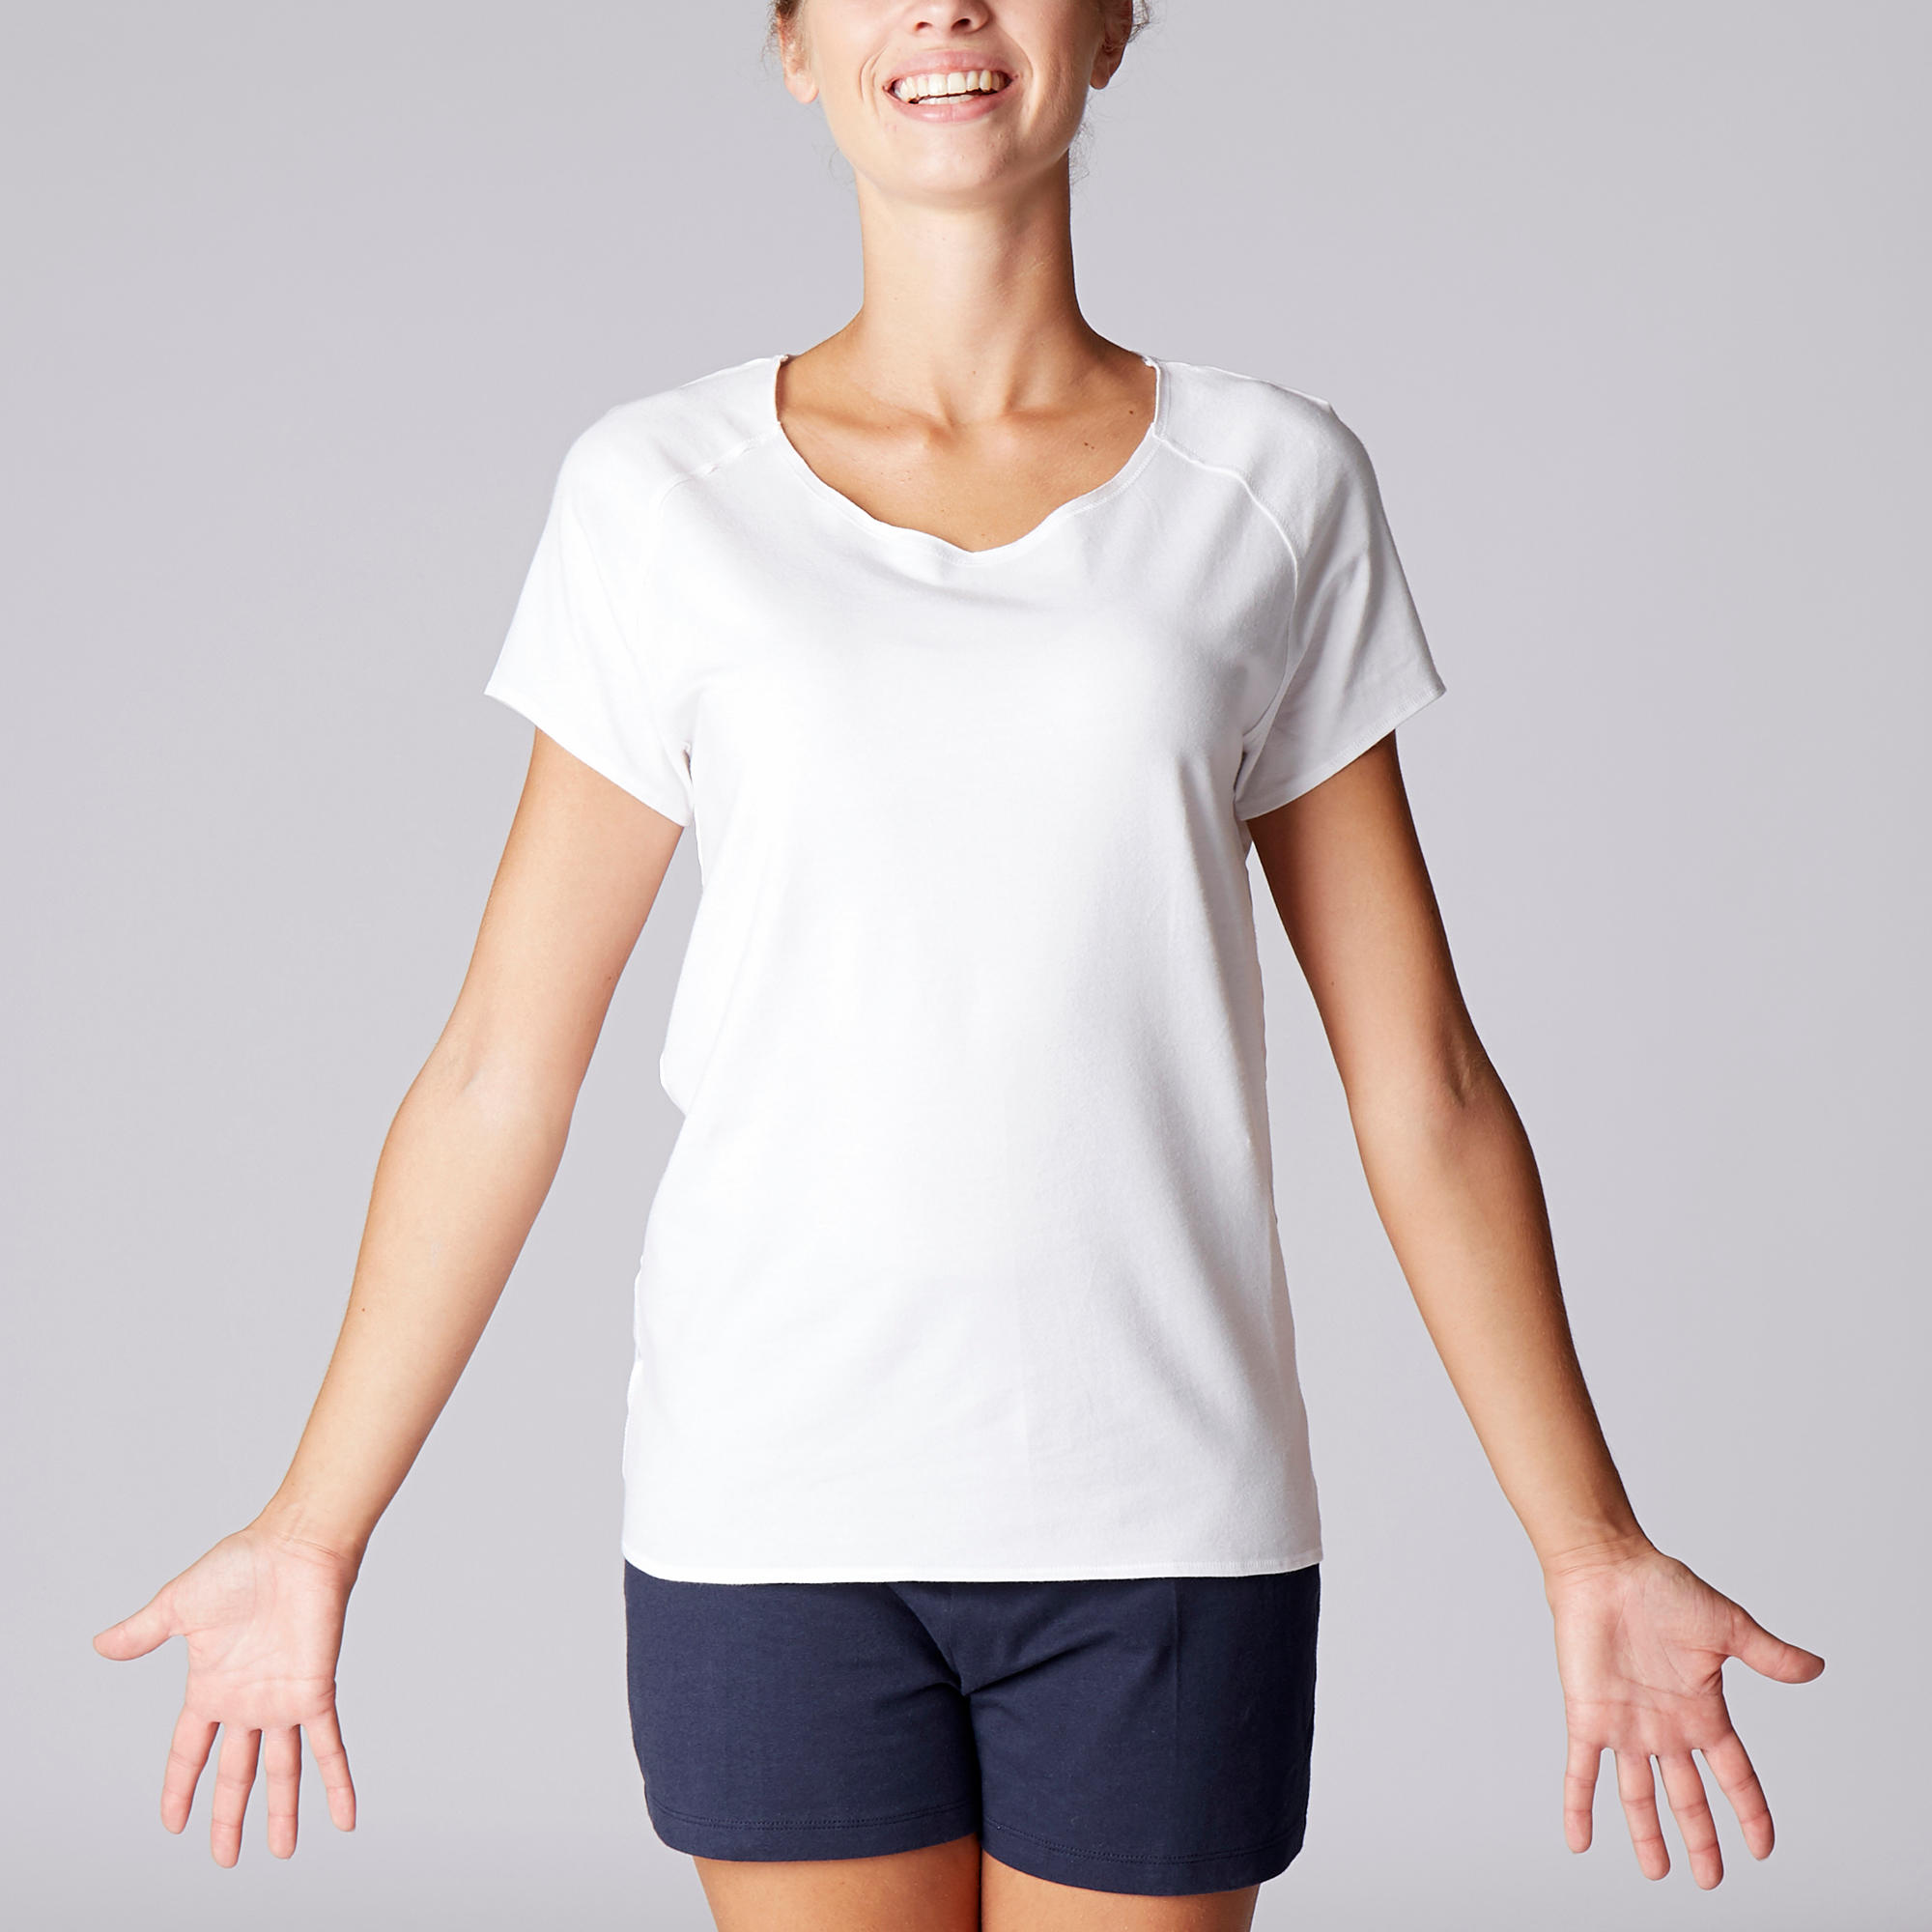 KIMJALY Women's Gentle Yoga Organic Cotton T-Shirt - White